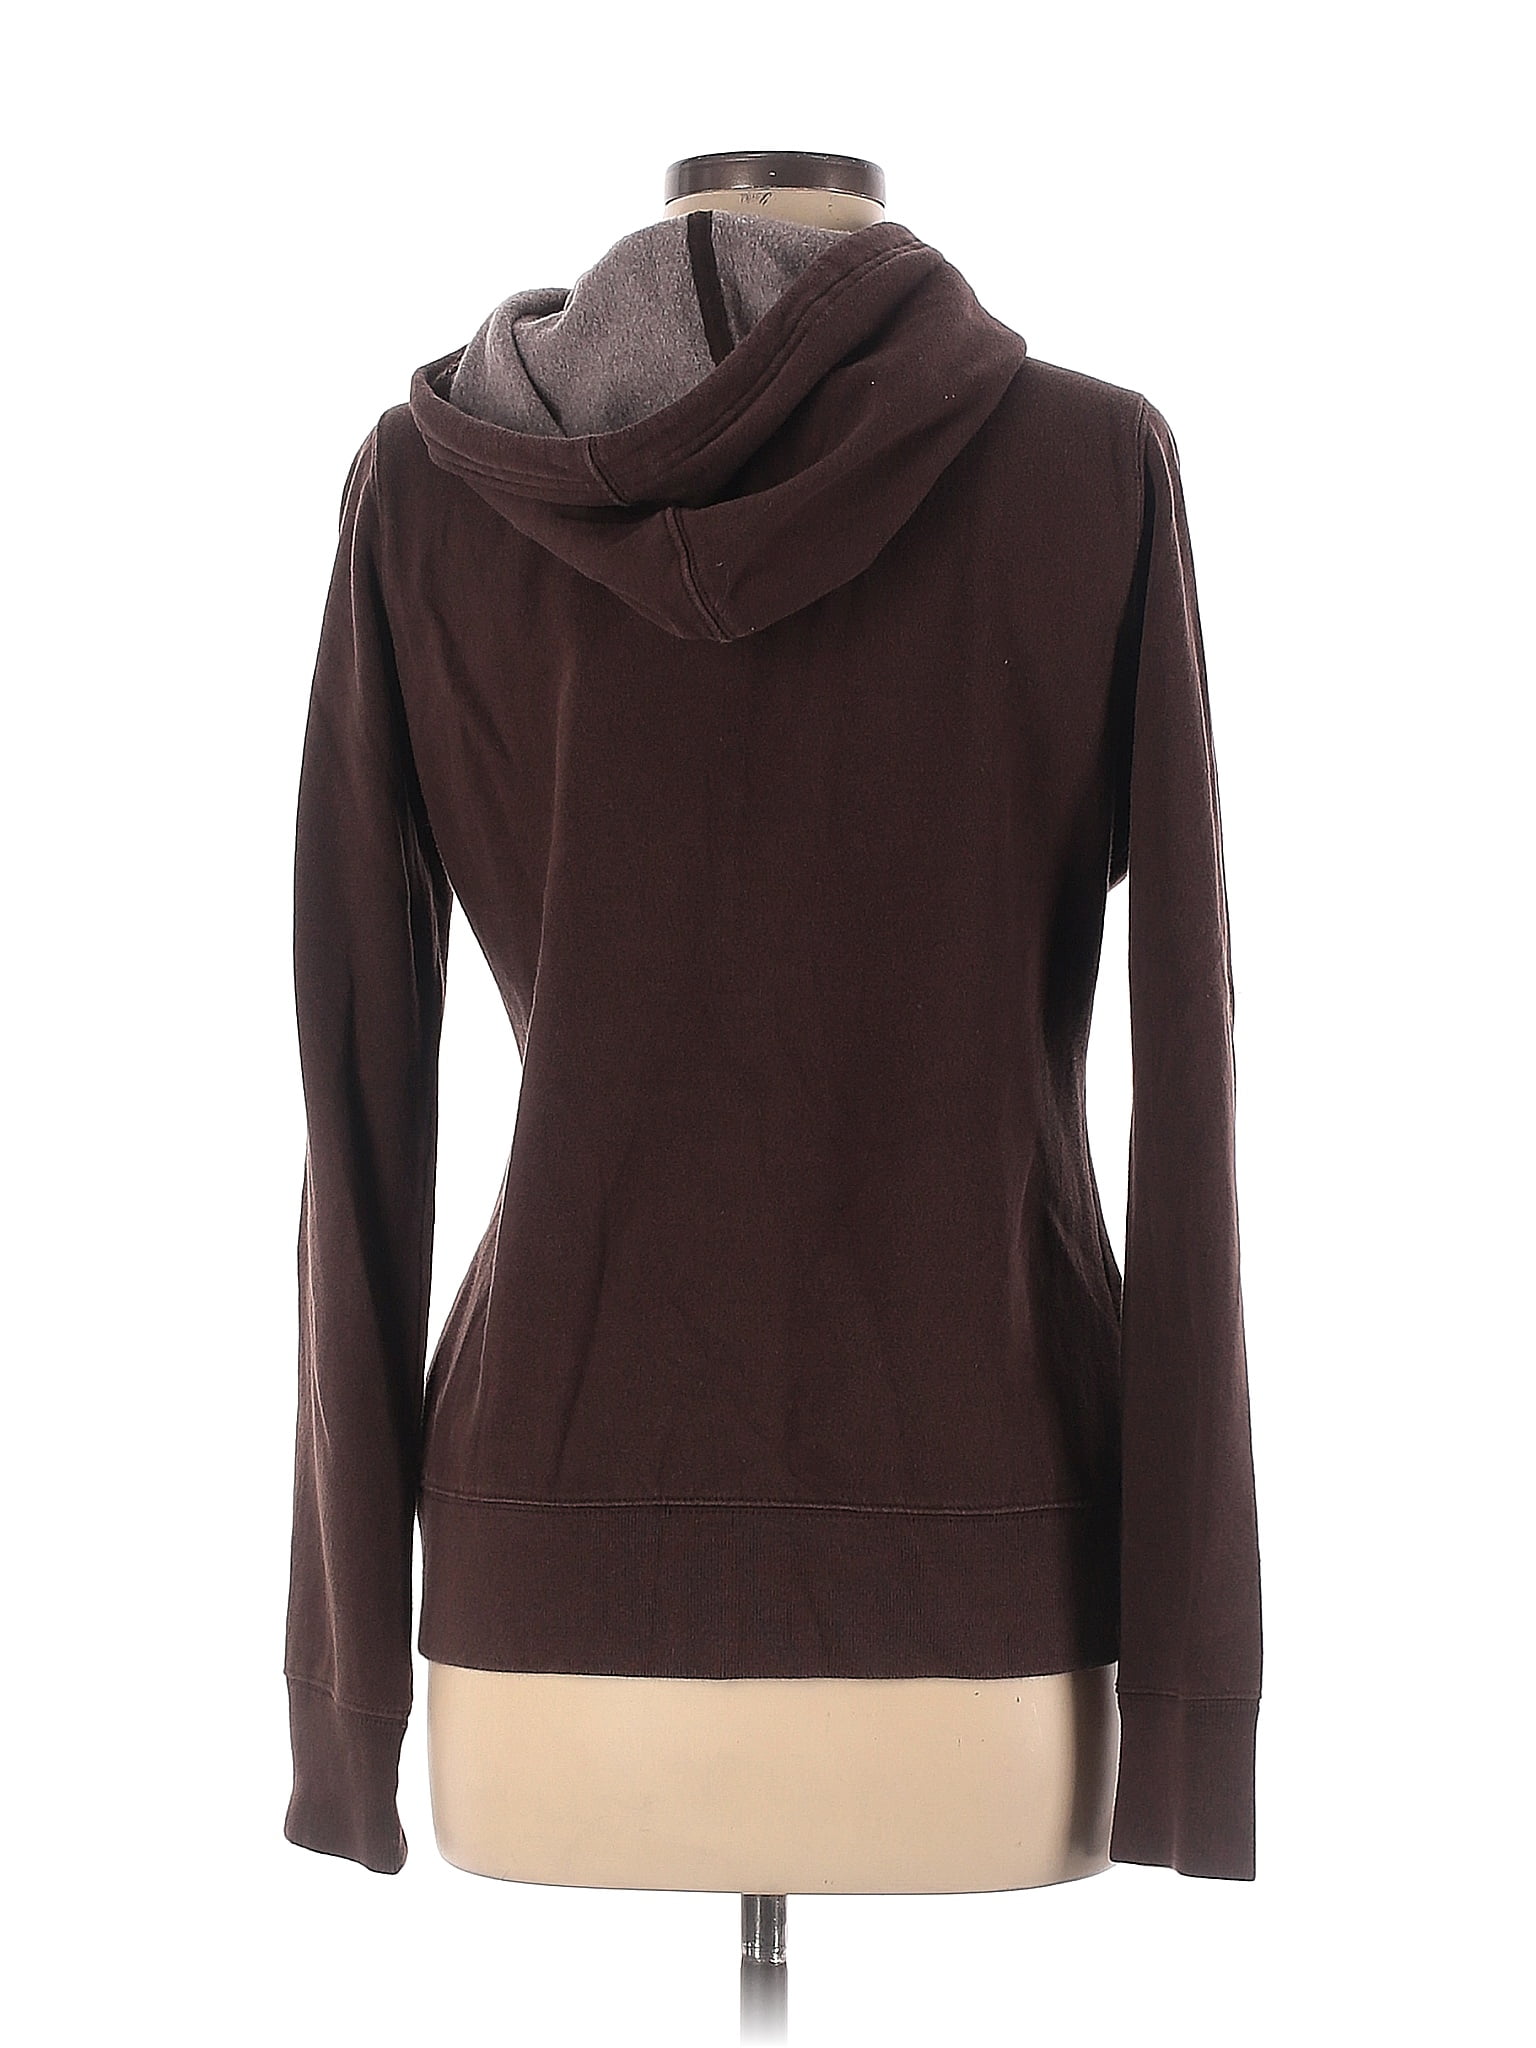 Lucky Brand Zip Up Hoodie: Brown Solid Tops - Size Medium